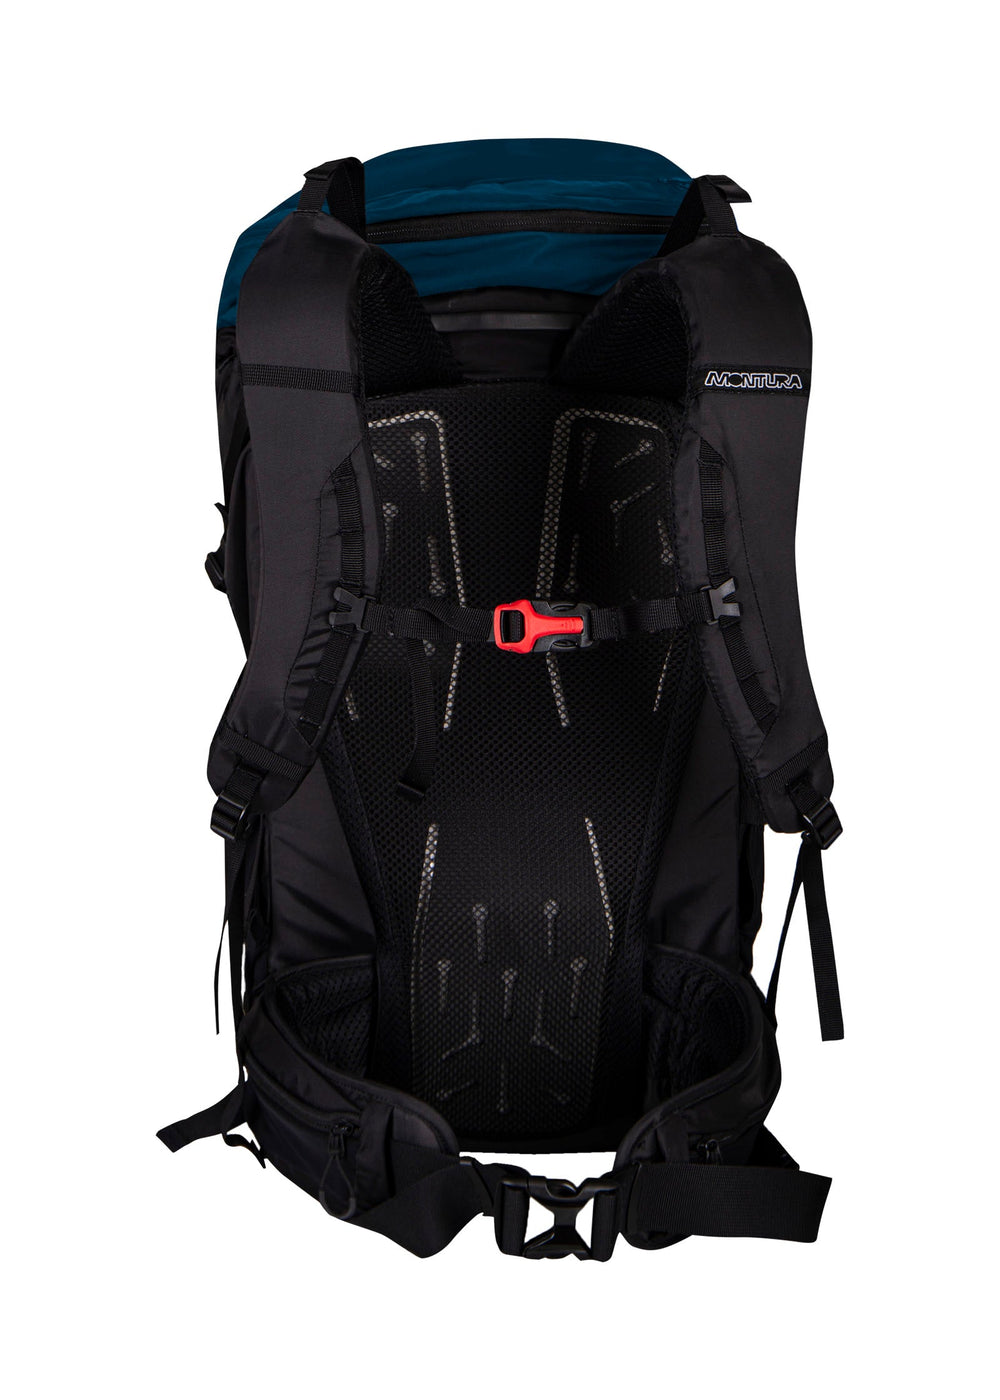 Ararat 35 Backpack - Deep Blue (87) - Blogside